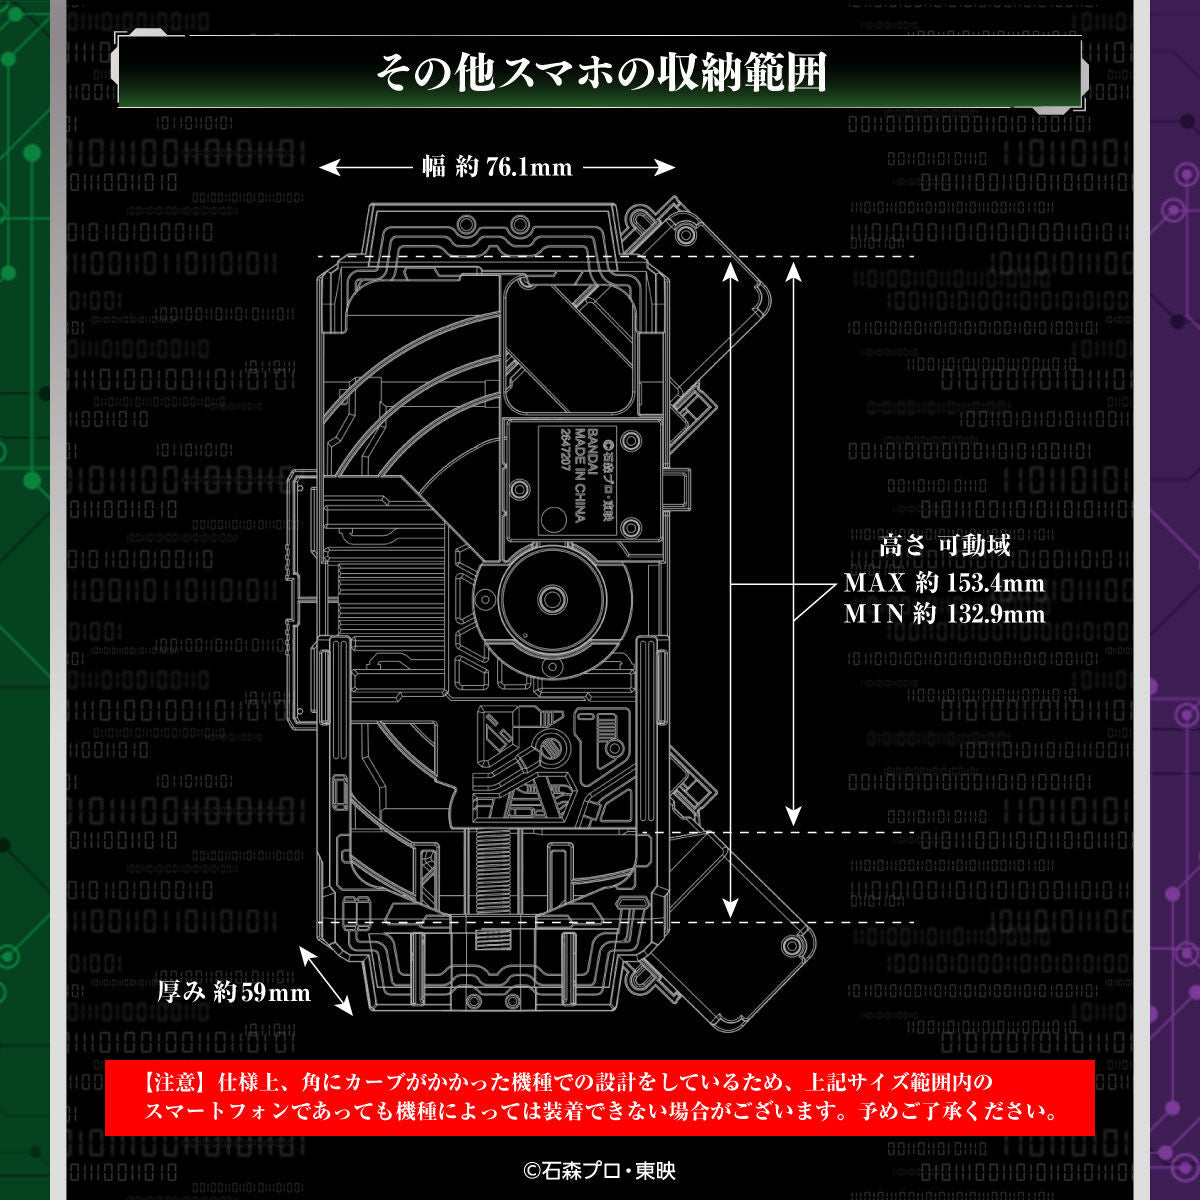 Kamen Rider W Double Driver Henshin Action Case